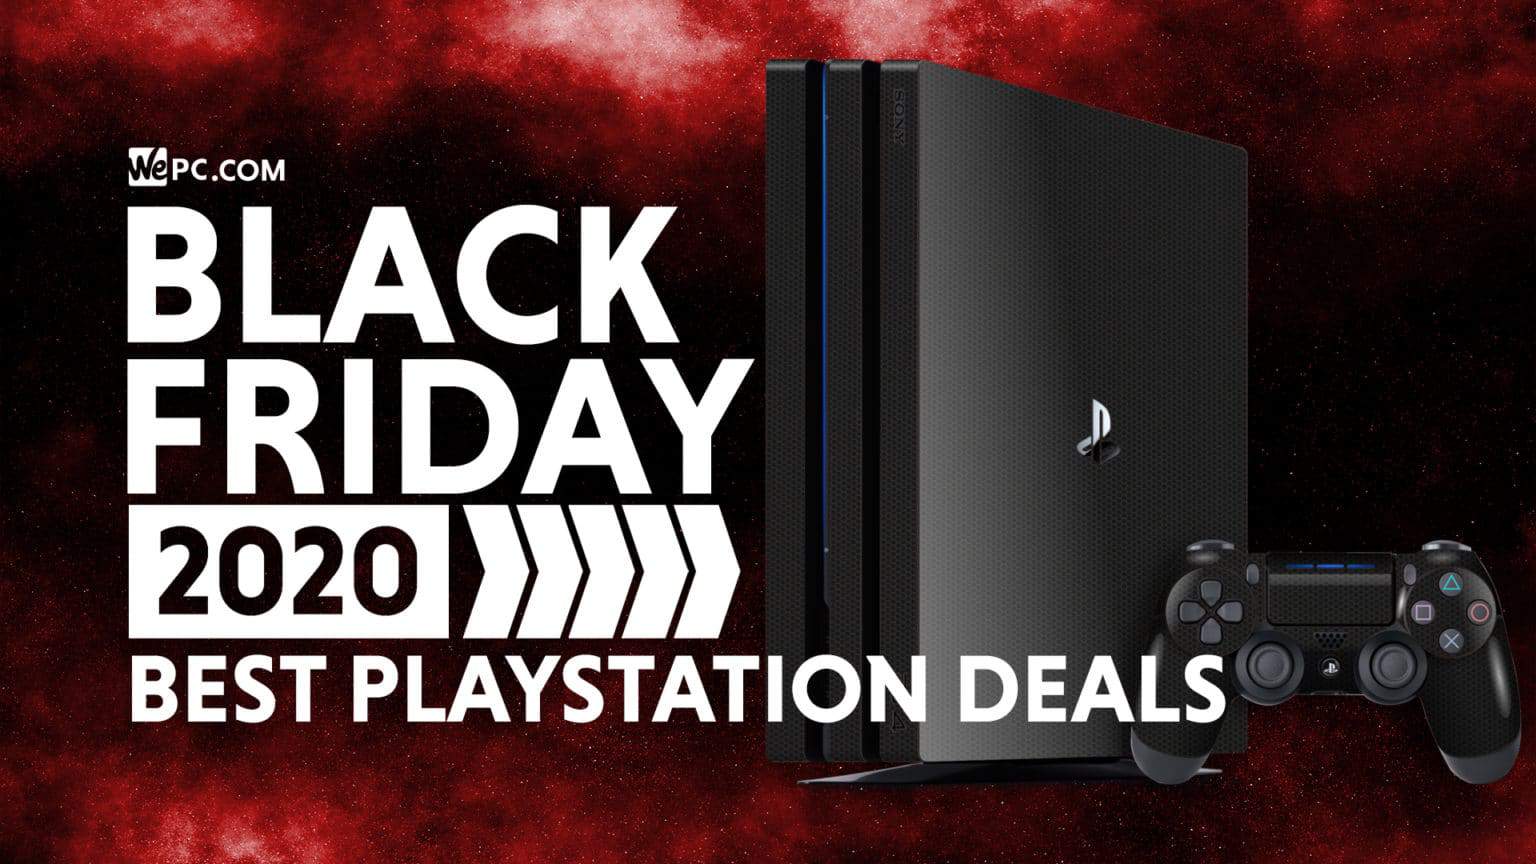 Playstation Black Friday Deals 2020 WePC